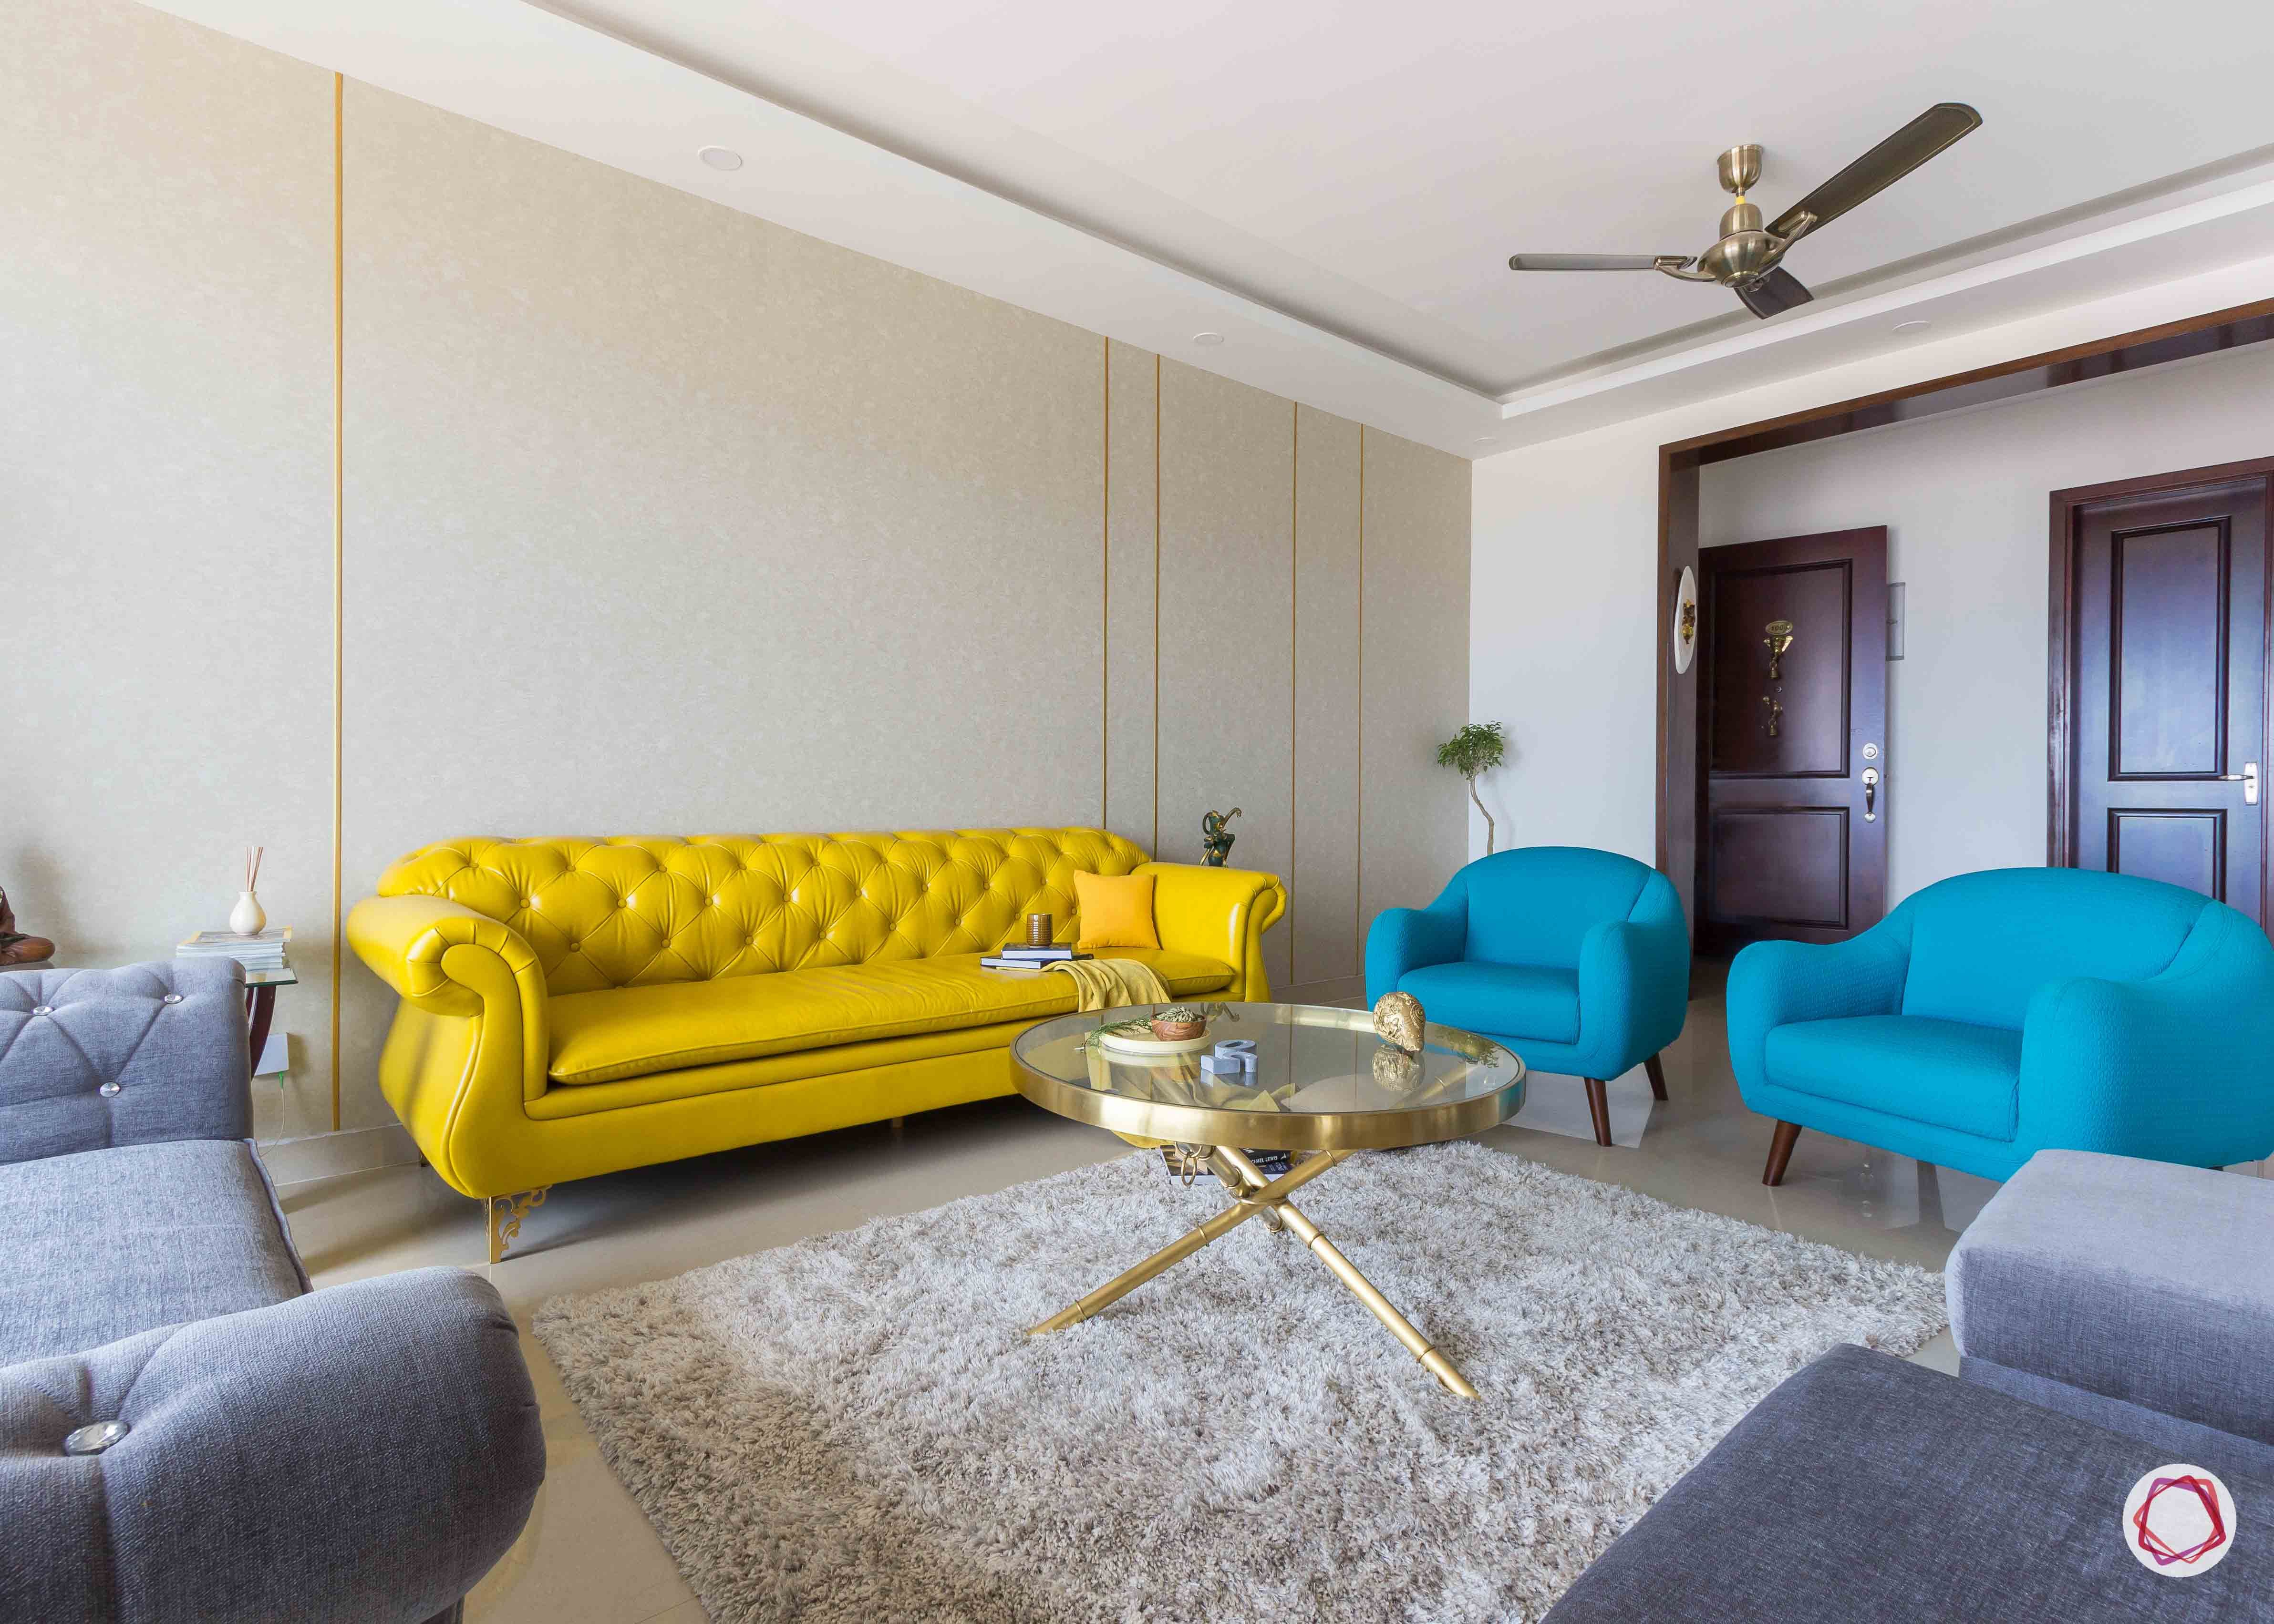 sofa colour-yellow sofa designs-yellow leather sofa